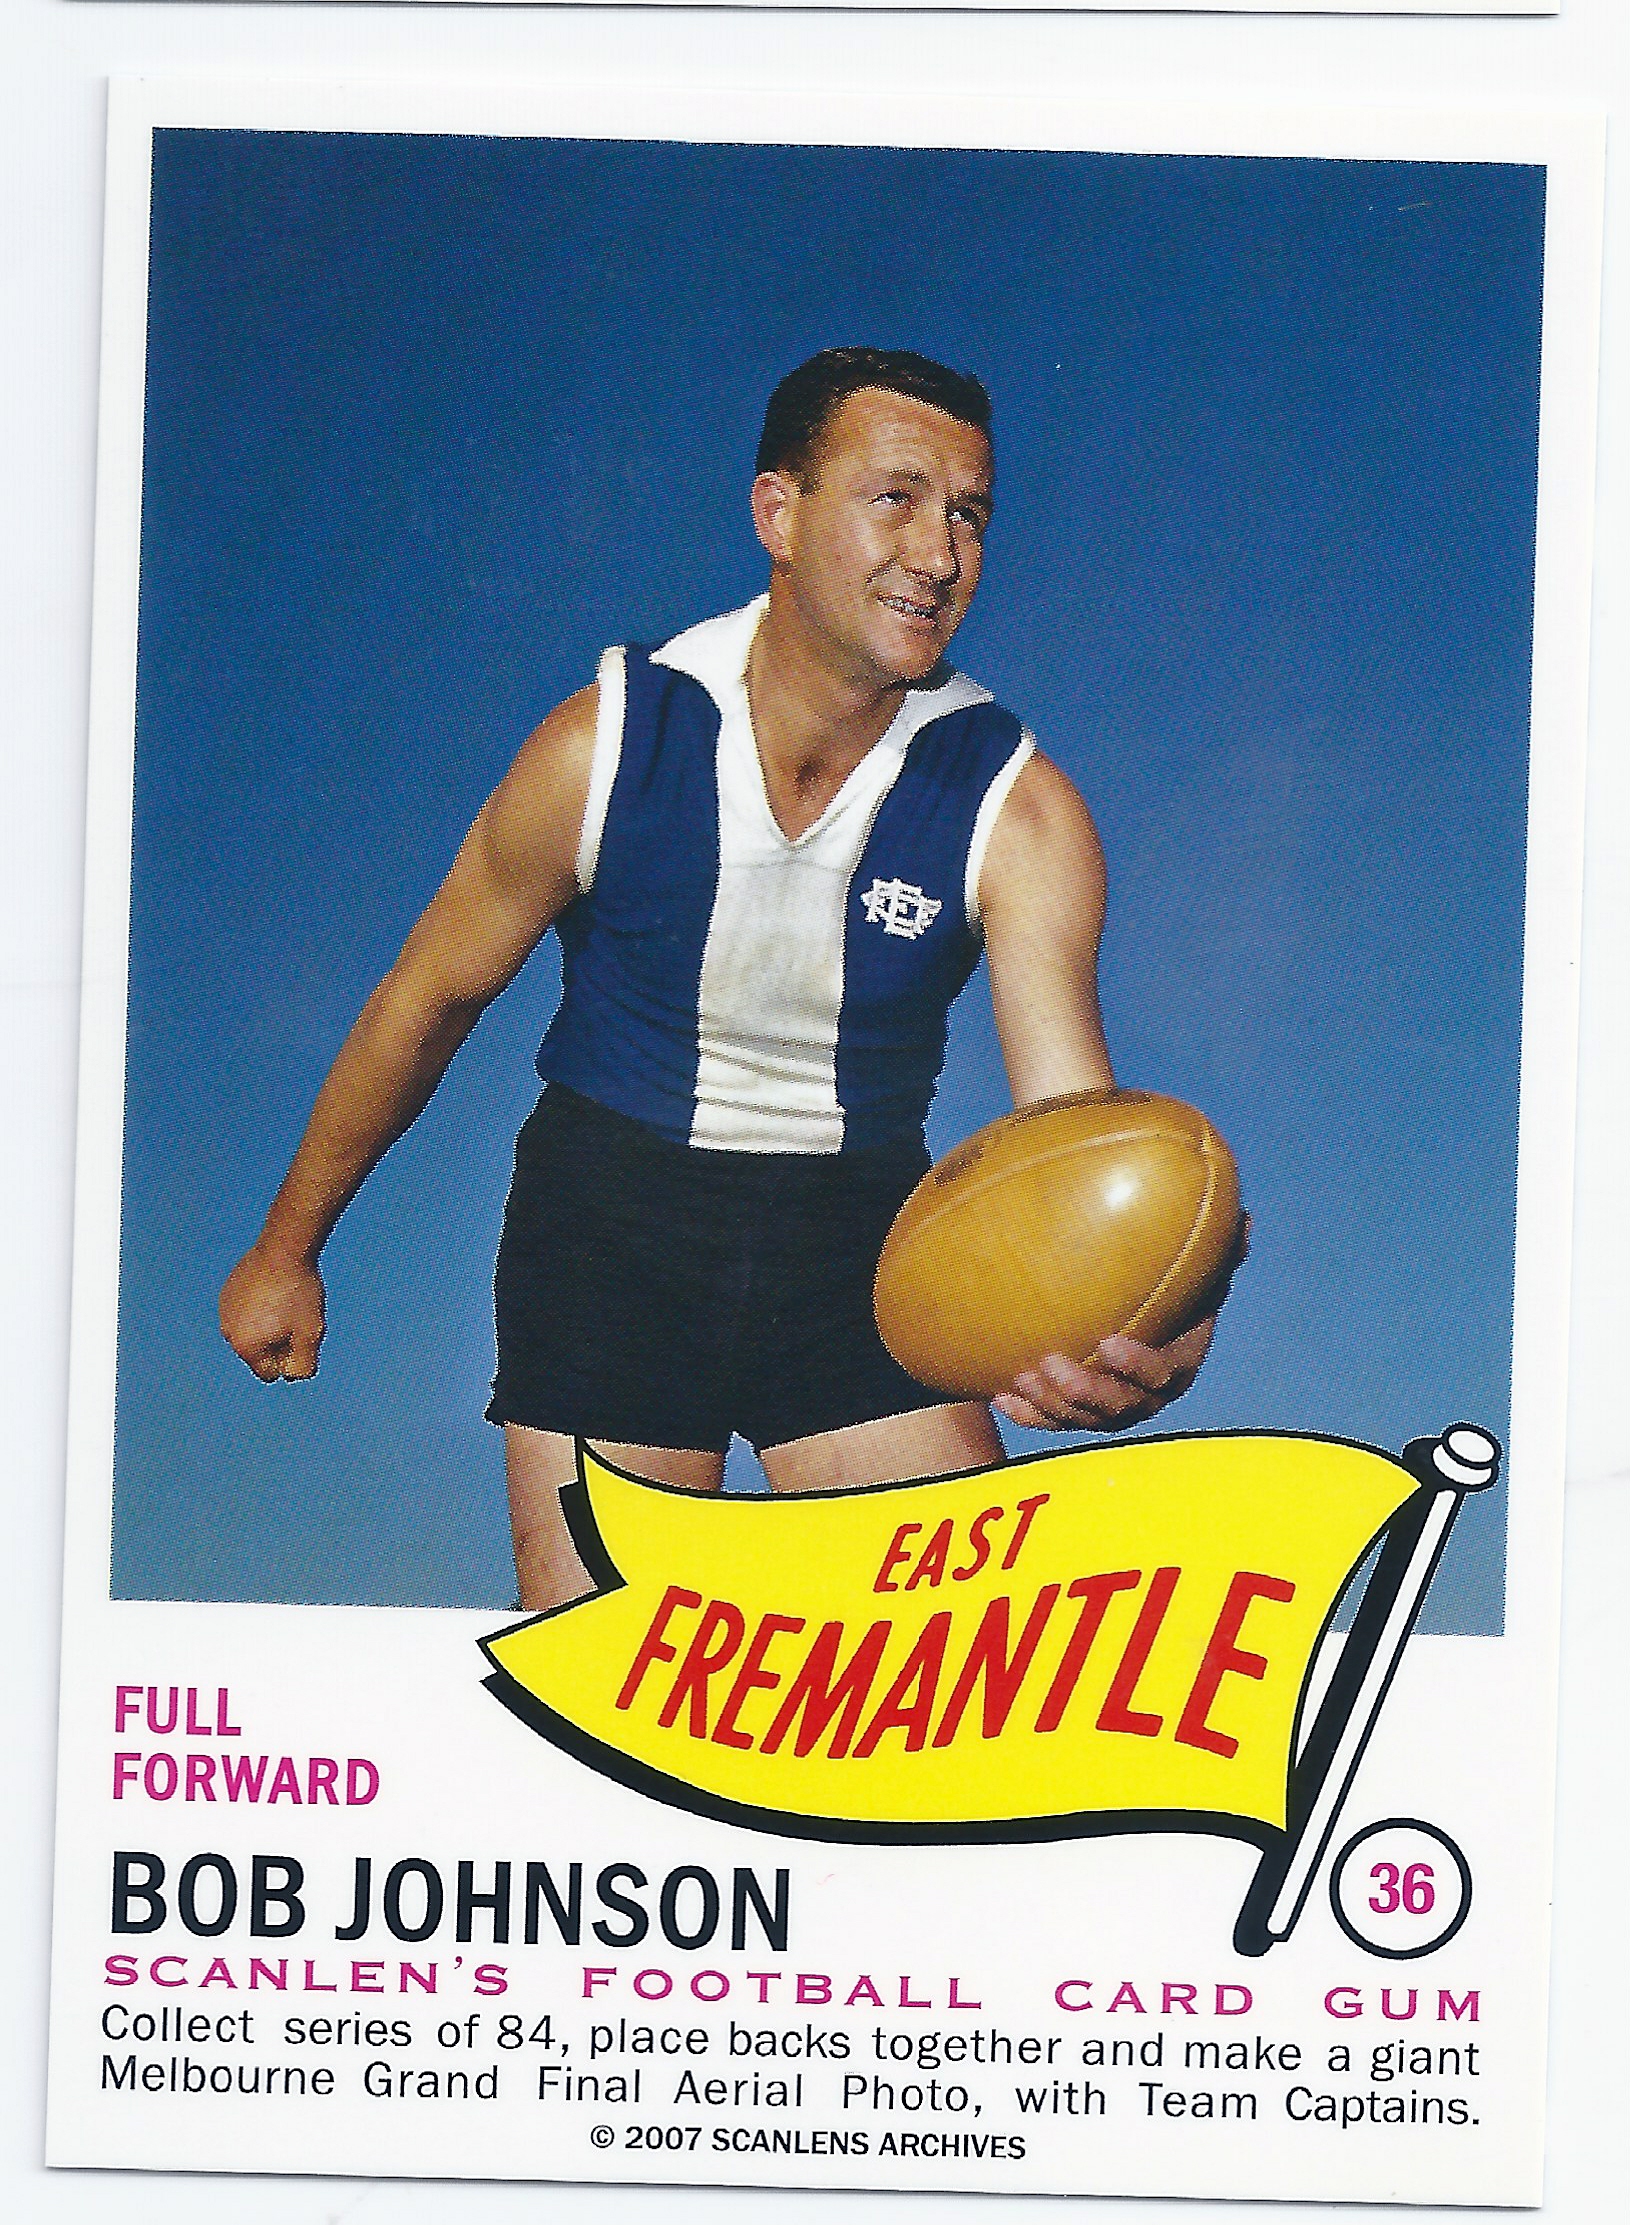 2007 – 1966 Scanlens Flag Archives (36) Bob Johnson East Fremantle